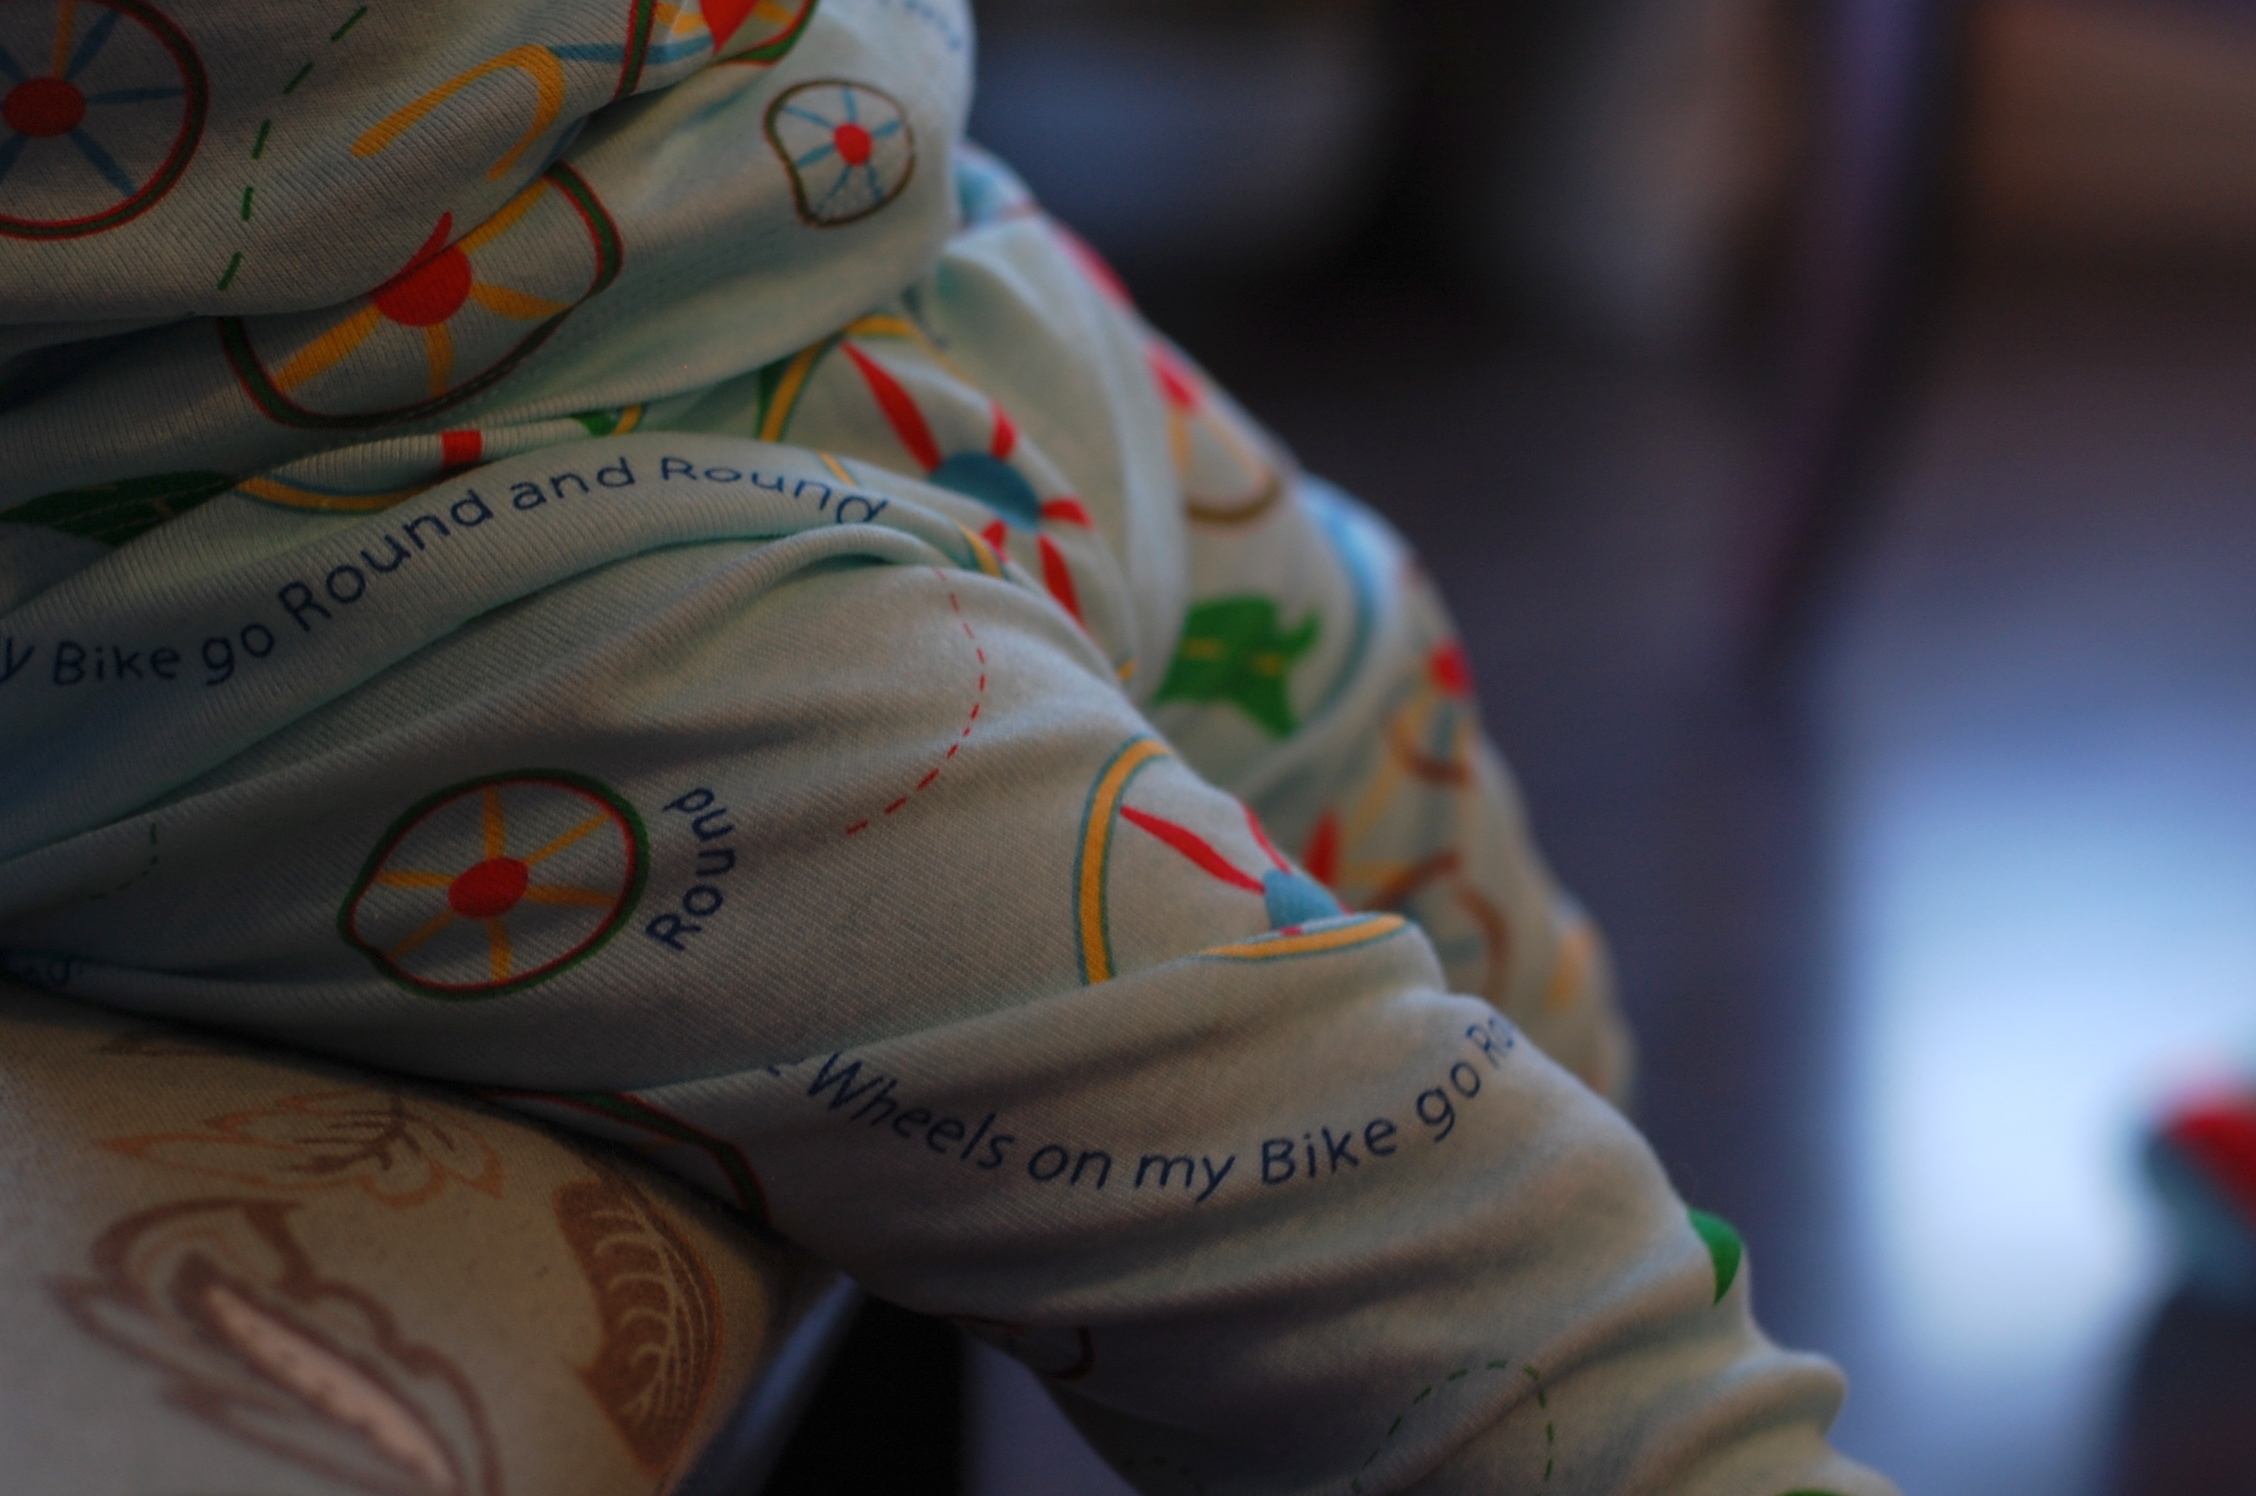 avoiding flame retardant chemicals in children’s sleepwear: new jammies giveaway